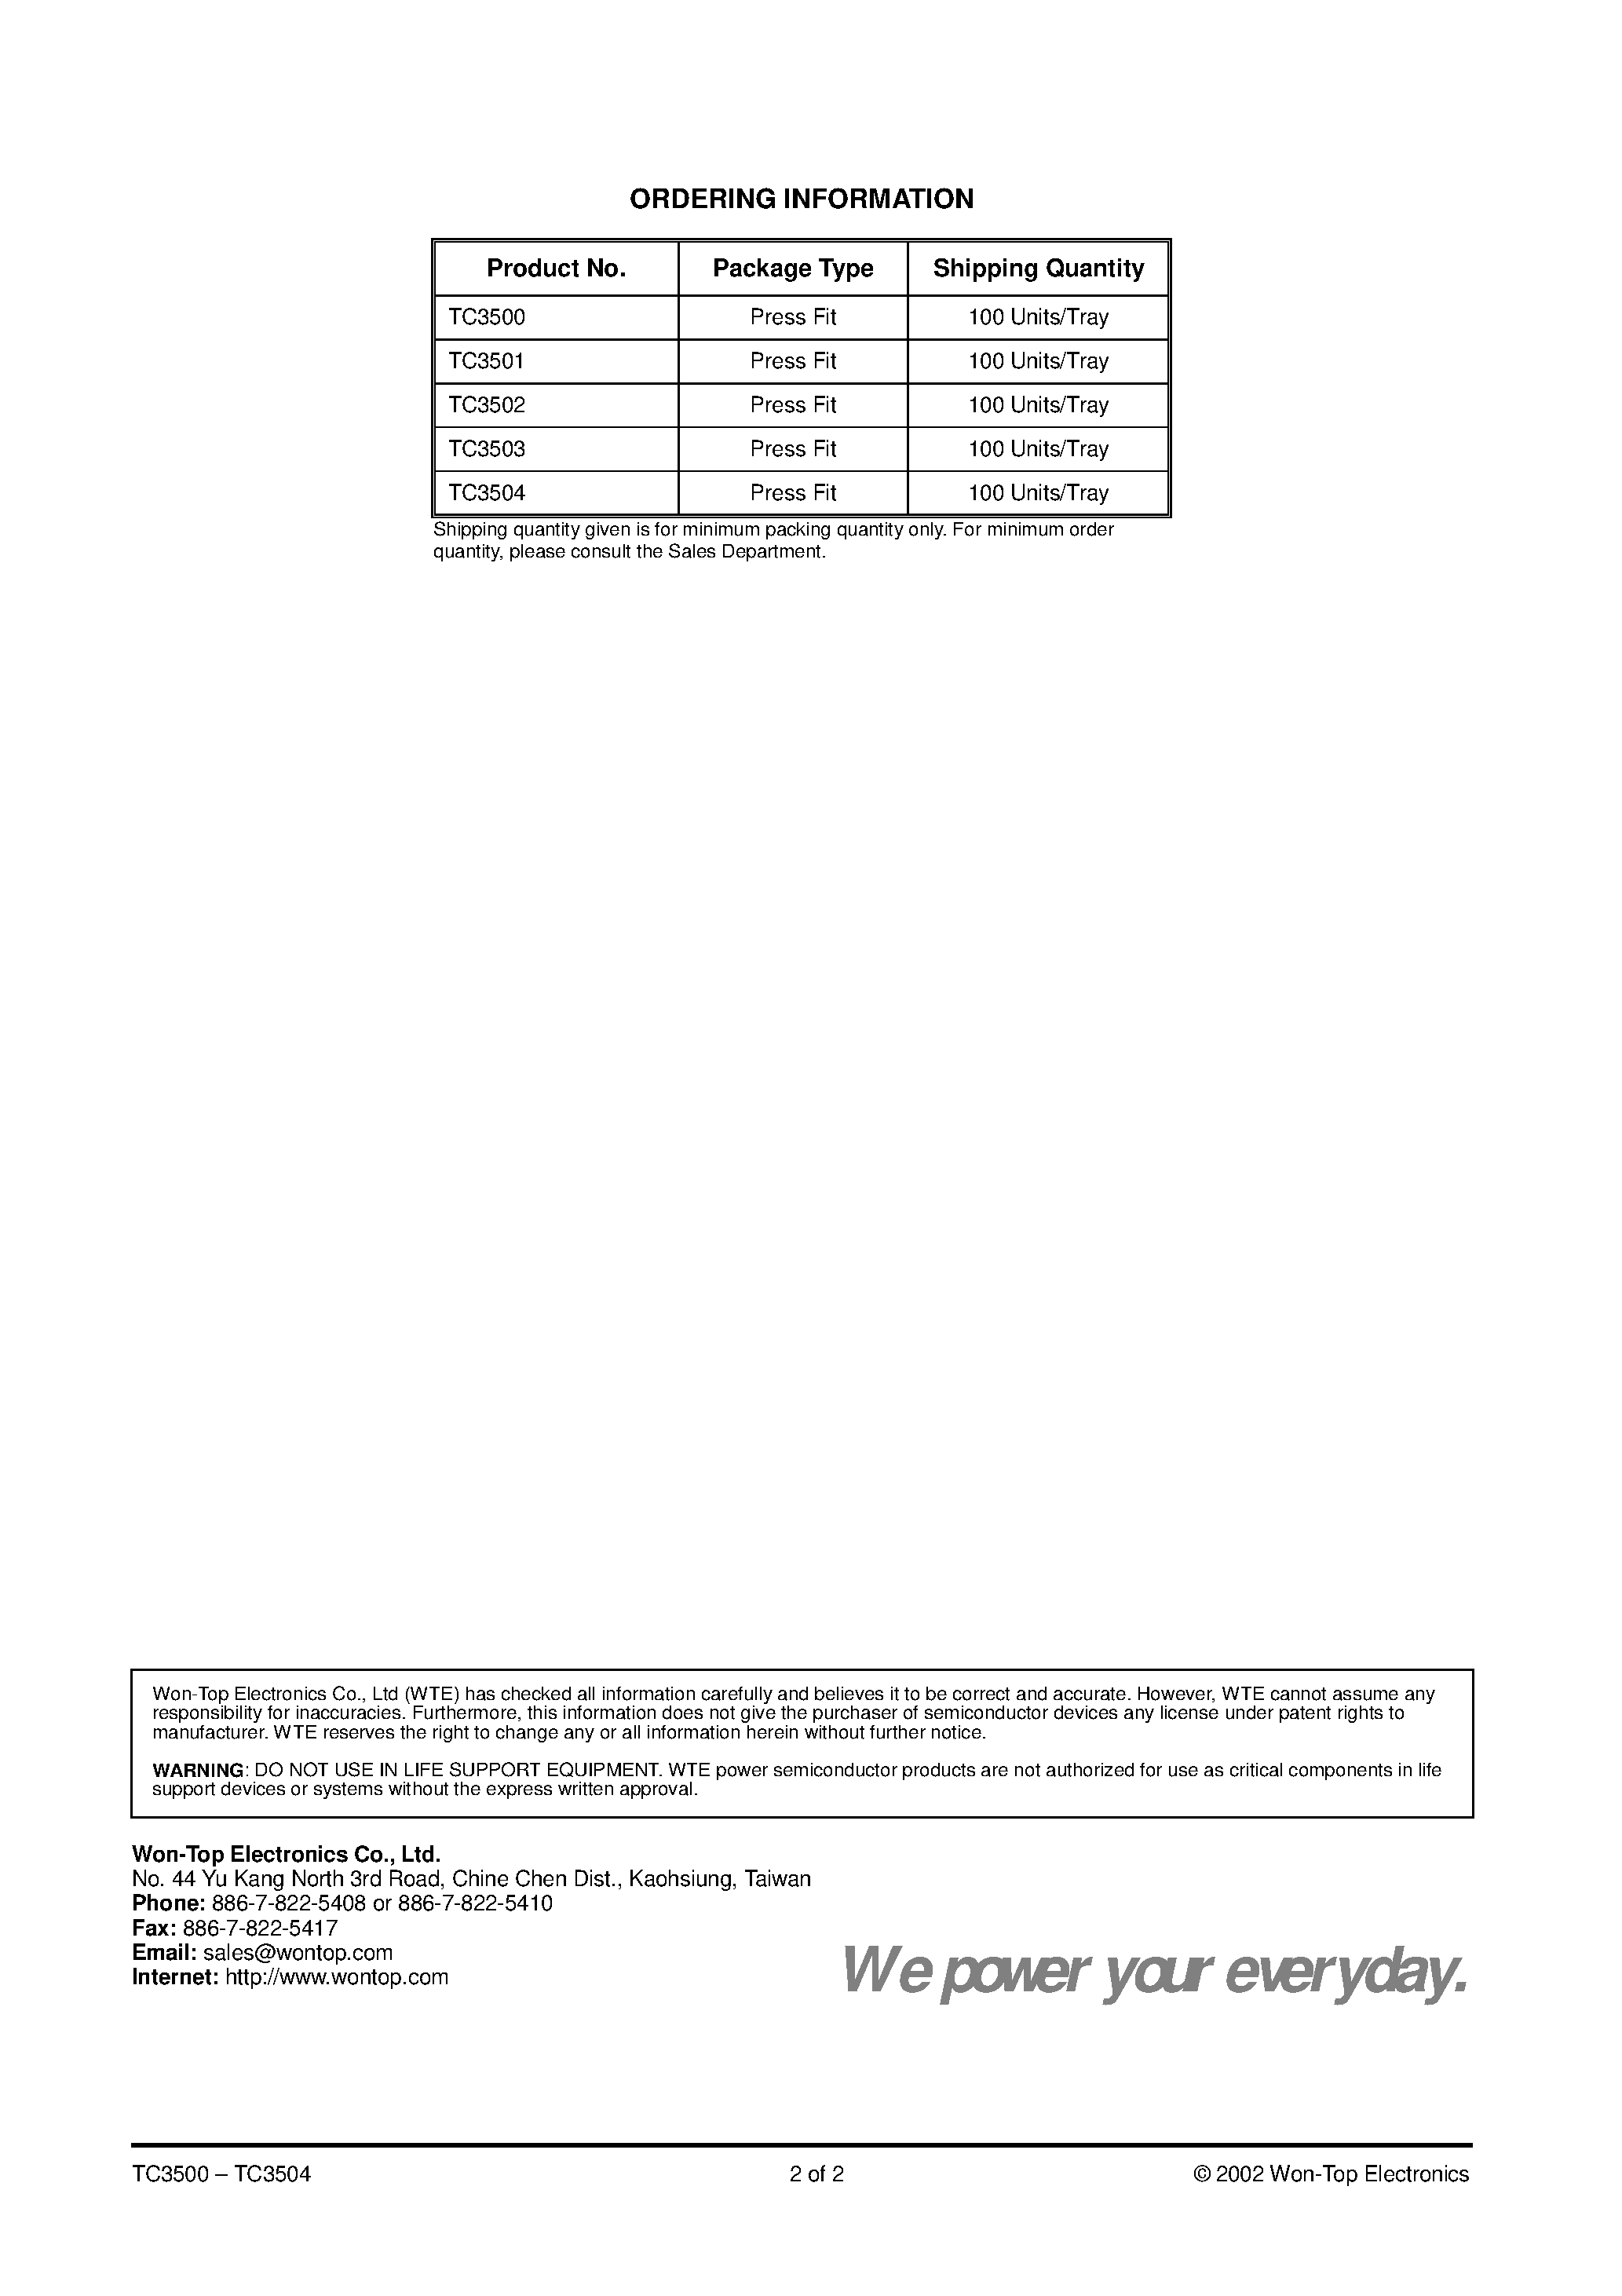 Datasheet TC3503 - (TC3500 - TC3504) 35A 5/16 TIN CAN TYPE PRESS-FIT DIODE page 2